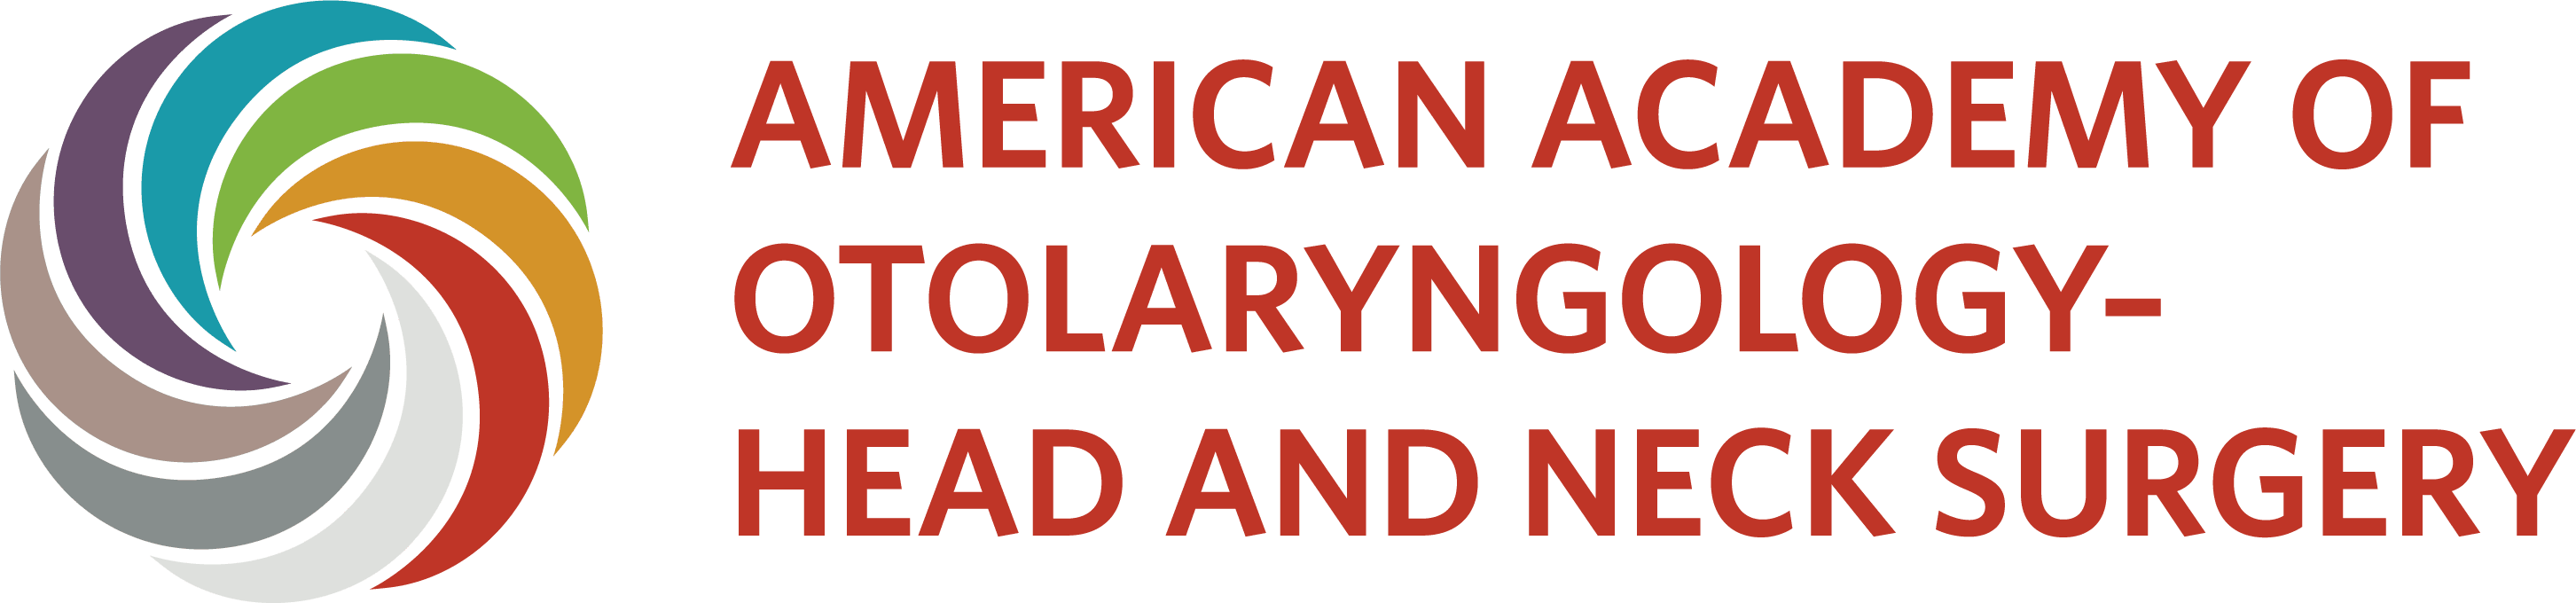 American Academy of Otolaryngology and Head & Neck Surgery